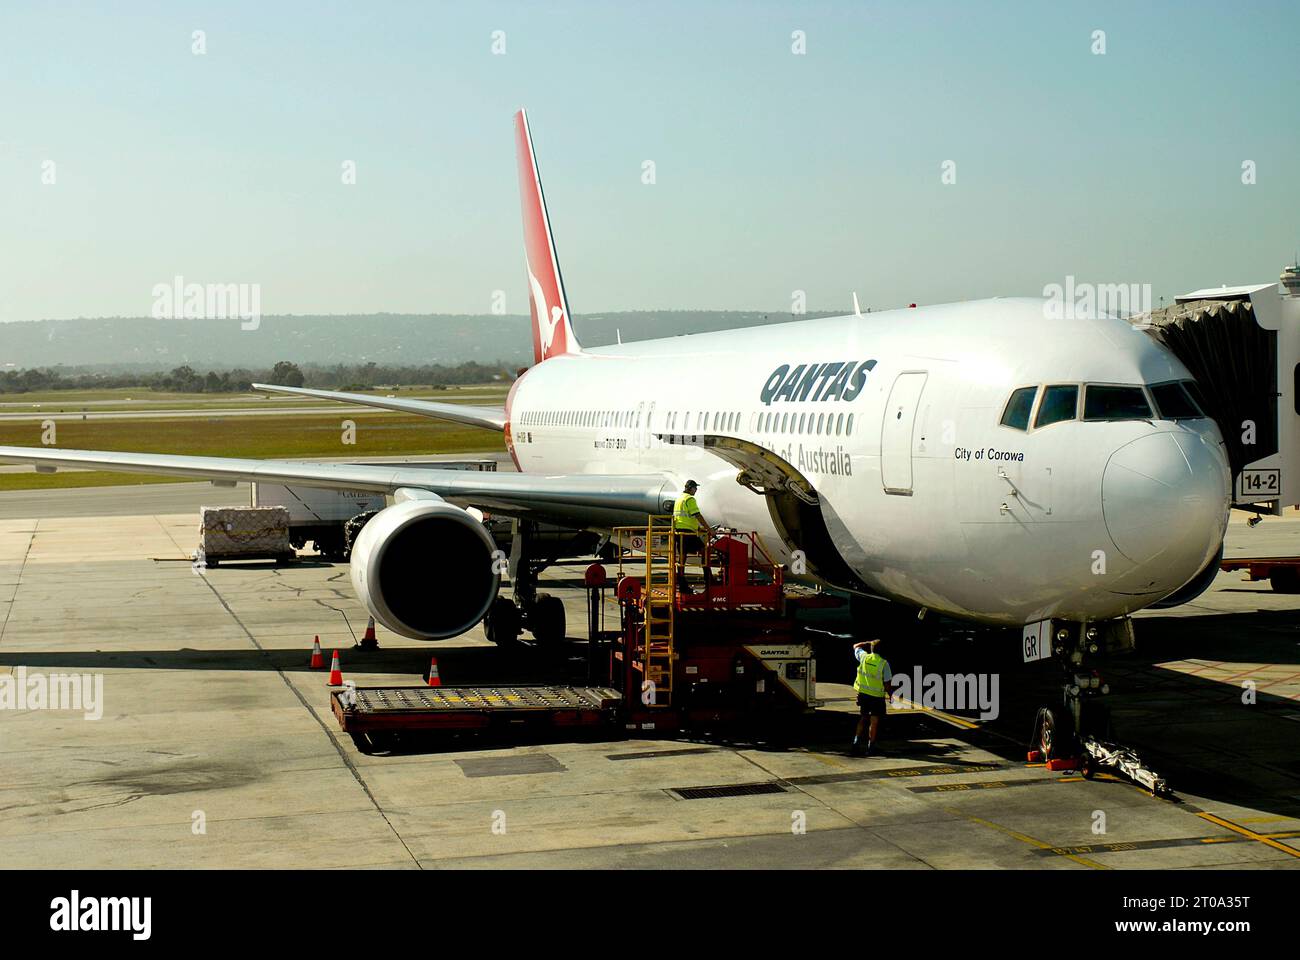 Boing 747 der Quantas Airline, BLF *** Quantas Airline Boeing 747, BLF 08002313 x Credit: Imago/Alamy Live News Stock Photo